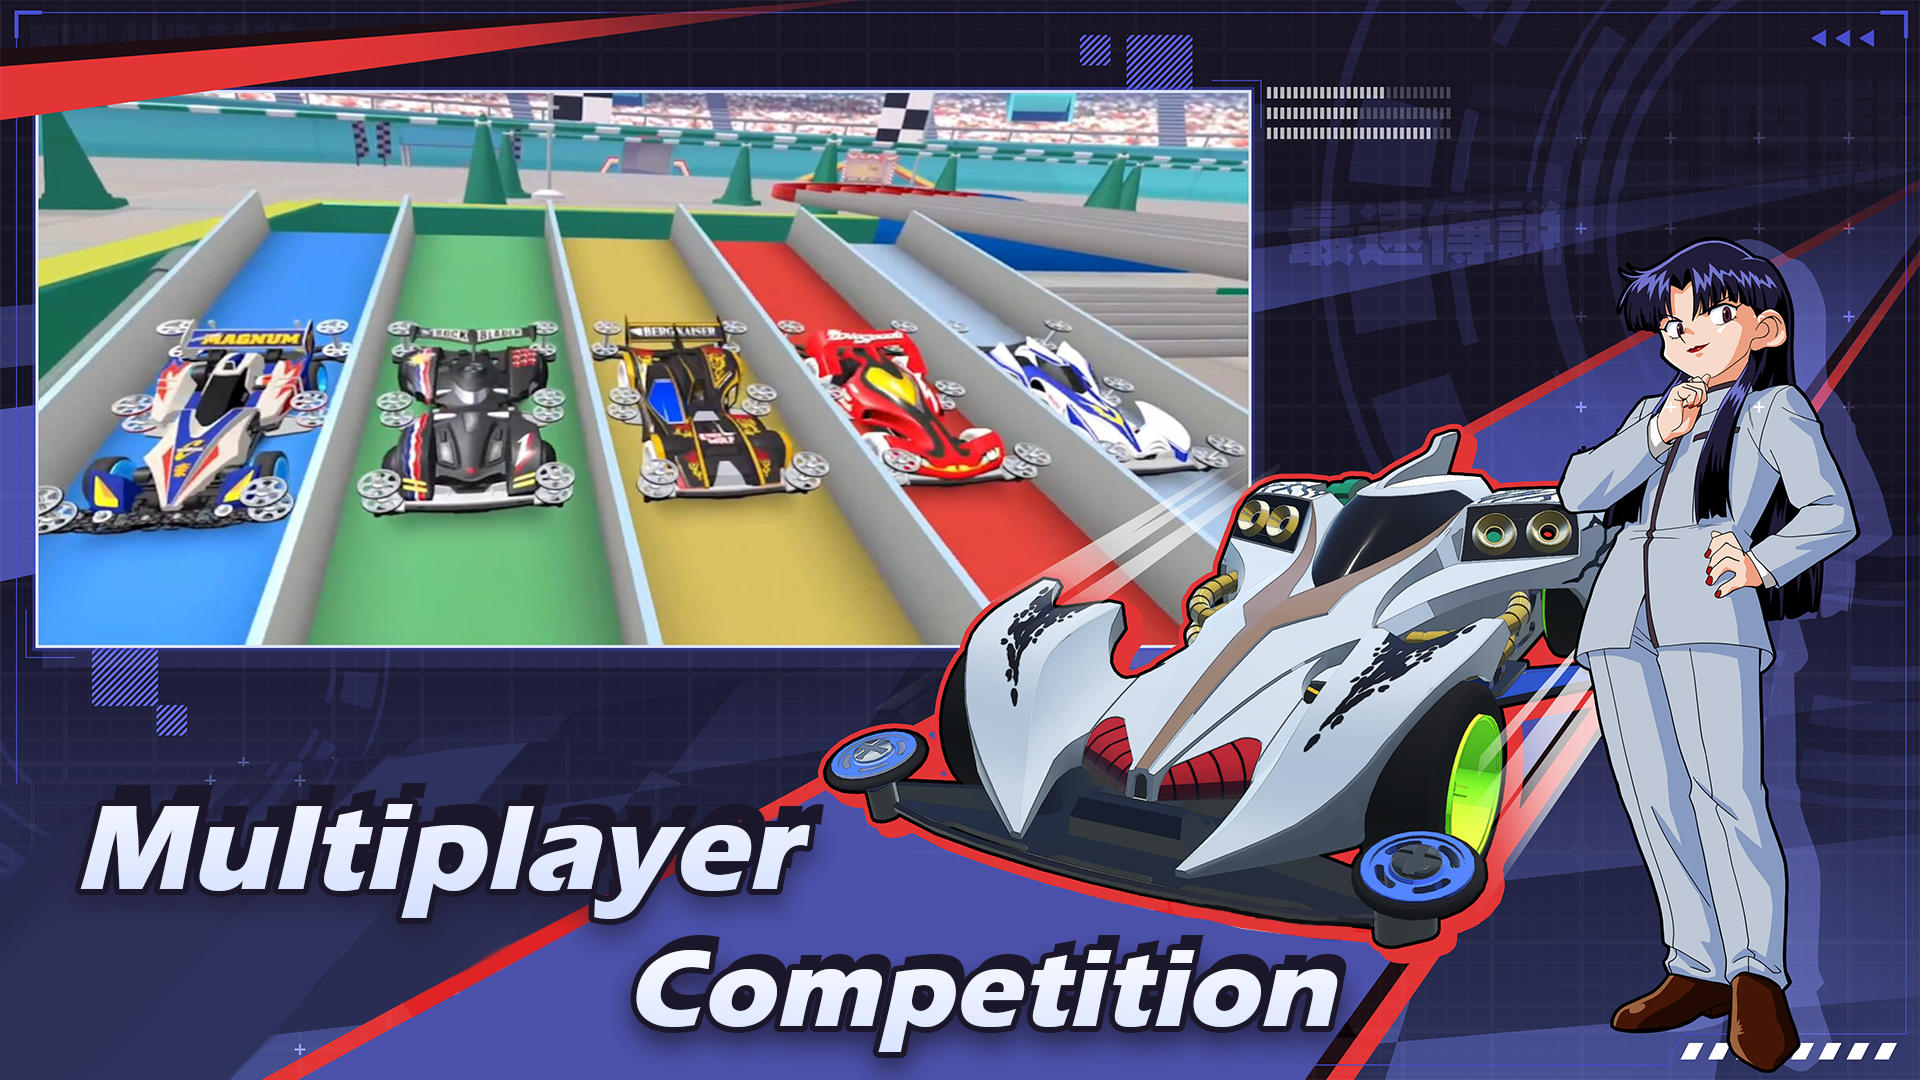 4WD Racer screenshot game